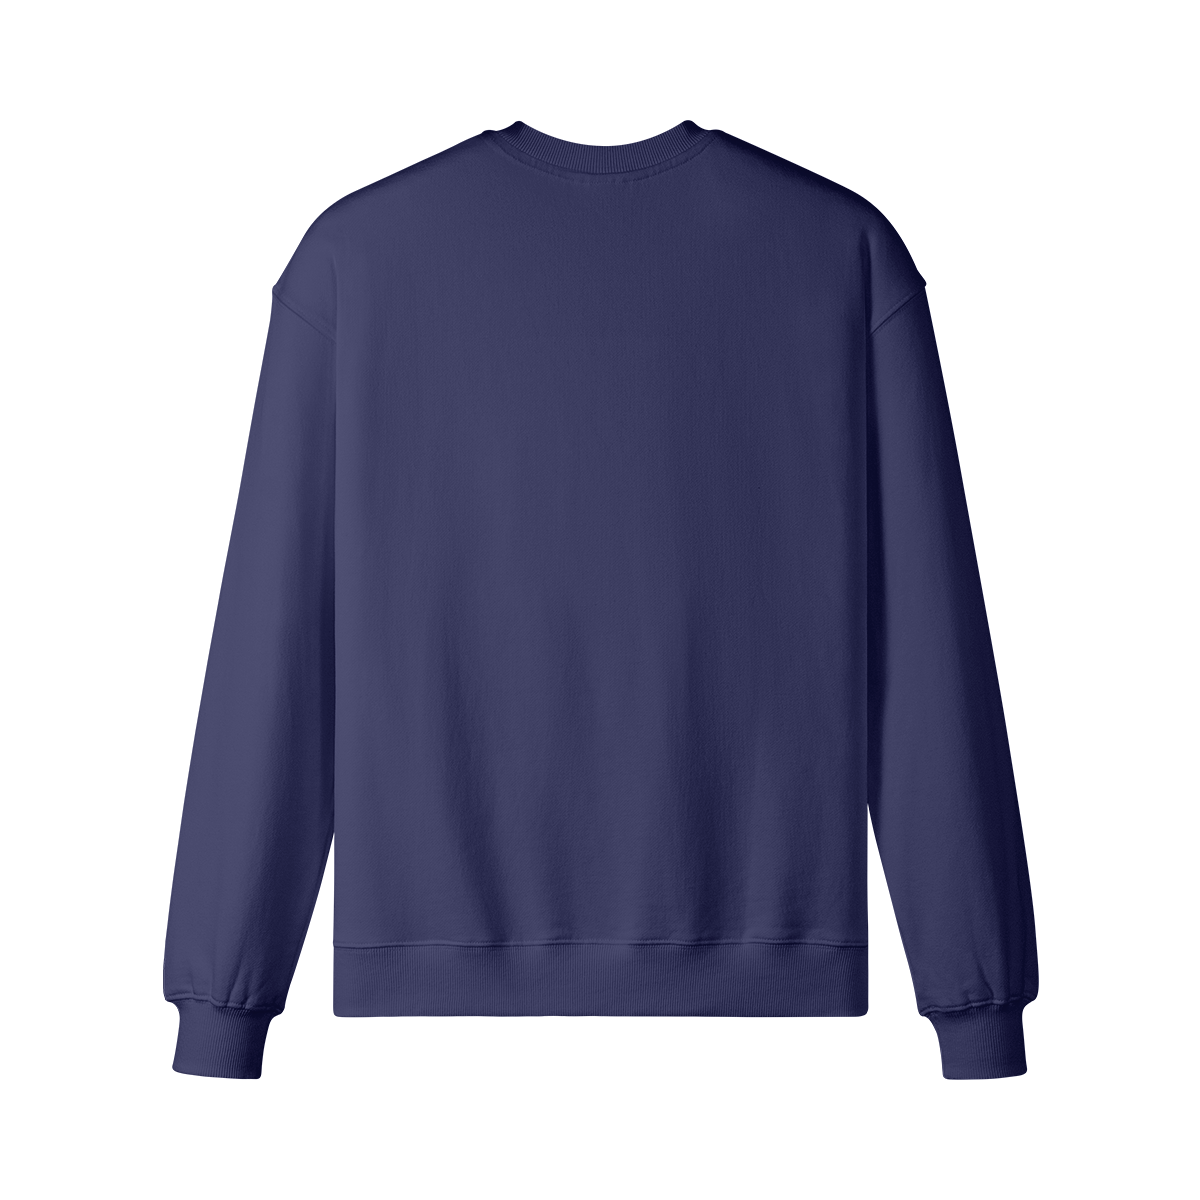 SPILL IT - Unisex Oversized Sweatshirt